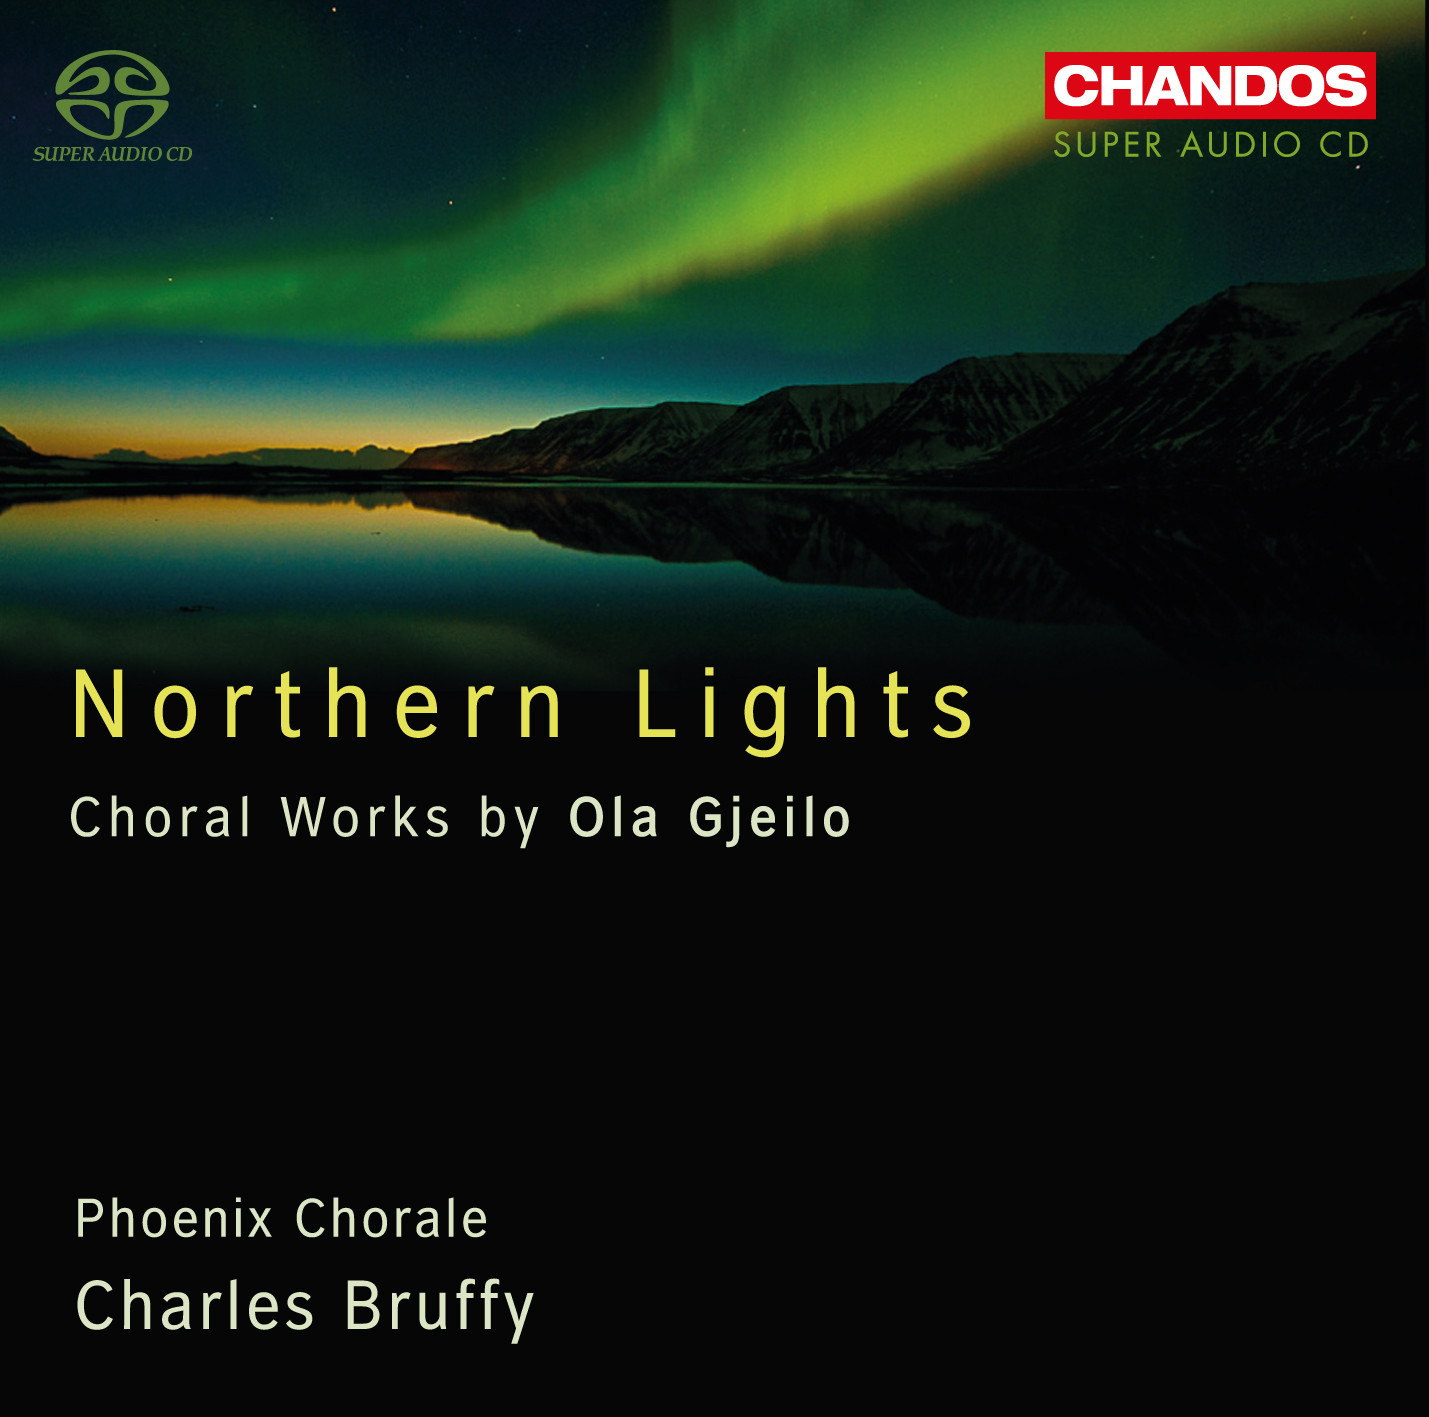 Phoenix Chorale, Charles Bruffy - Northern Lights: Choral Works by Ola Gjeilo (2012) [eClassical FLAC 24bit/96kHz]